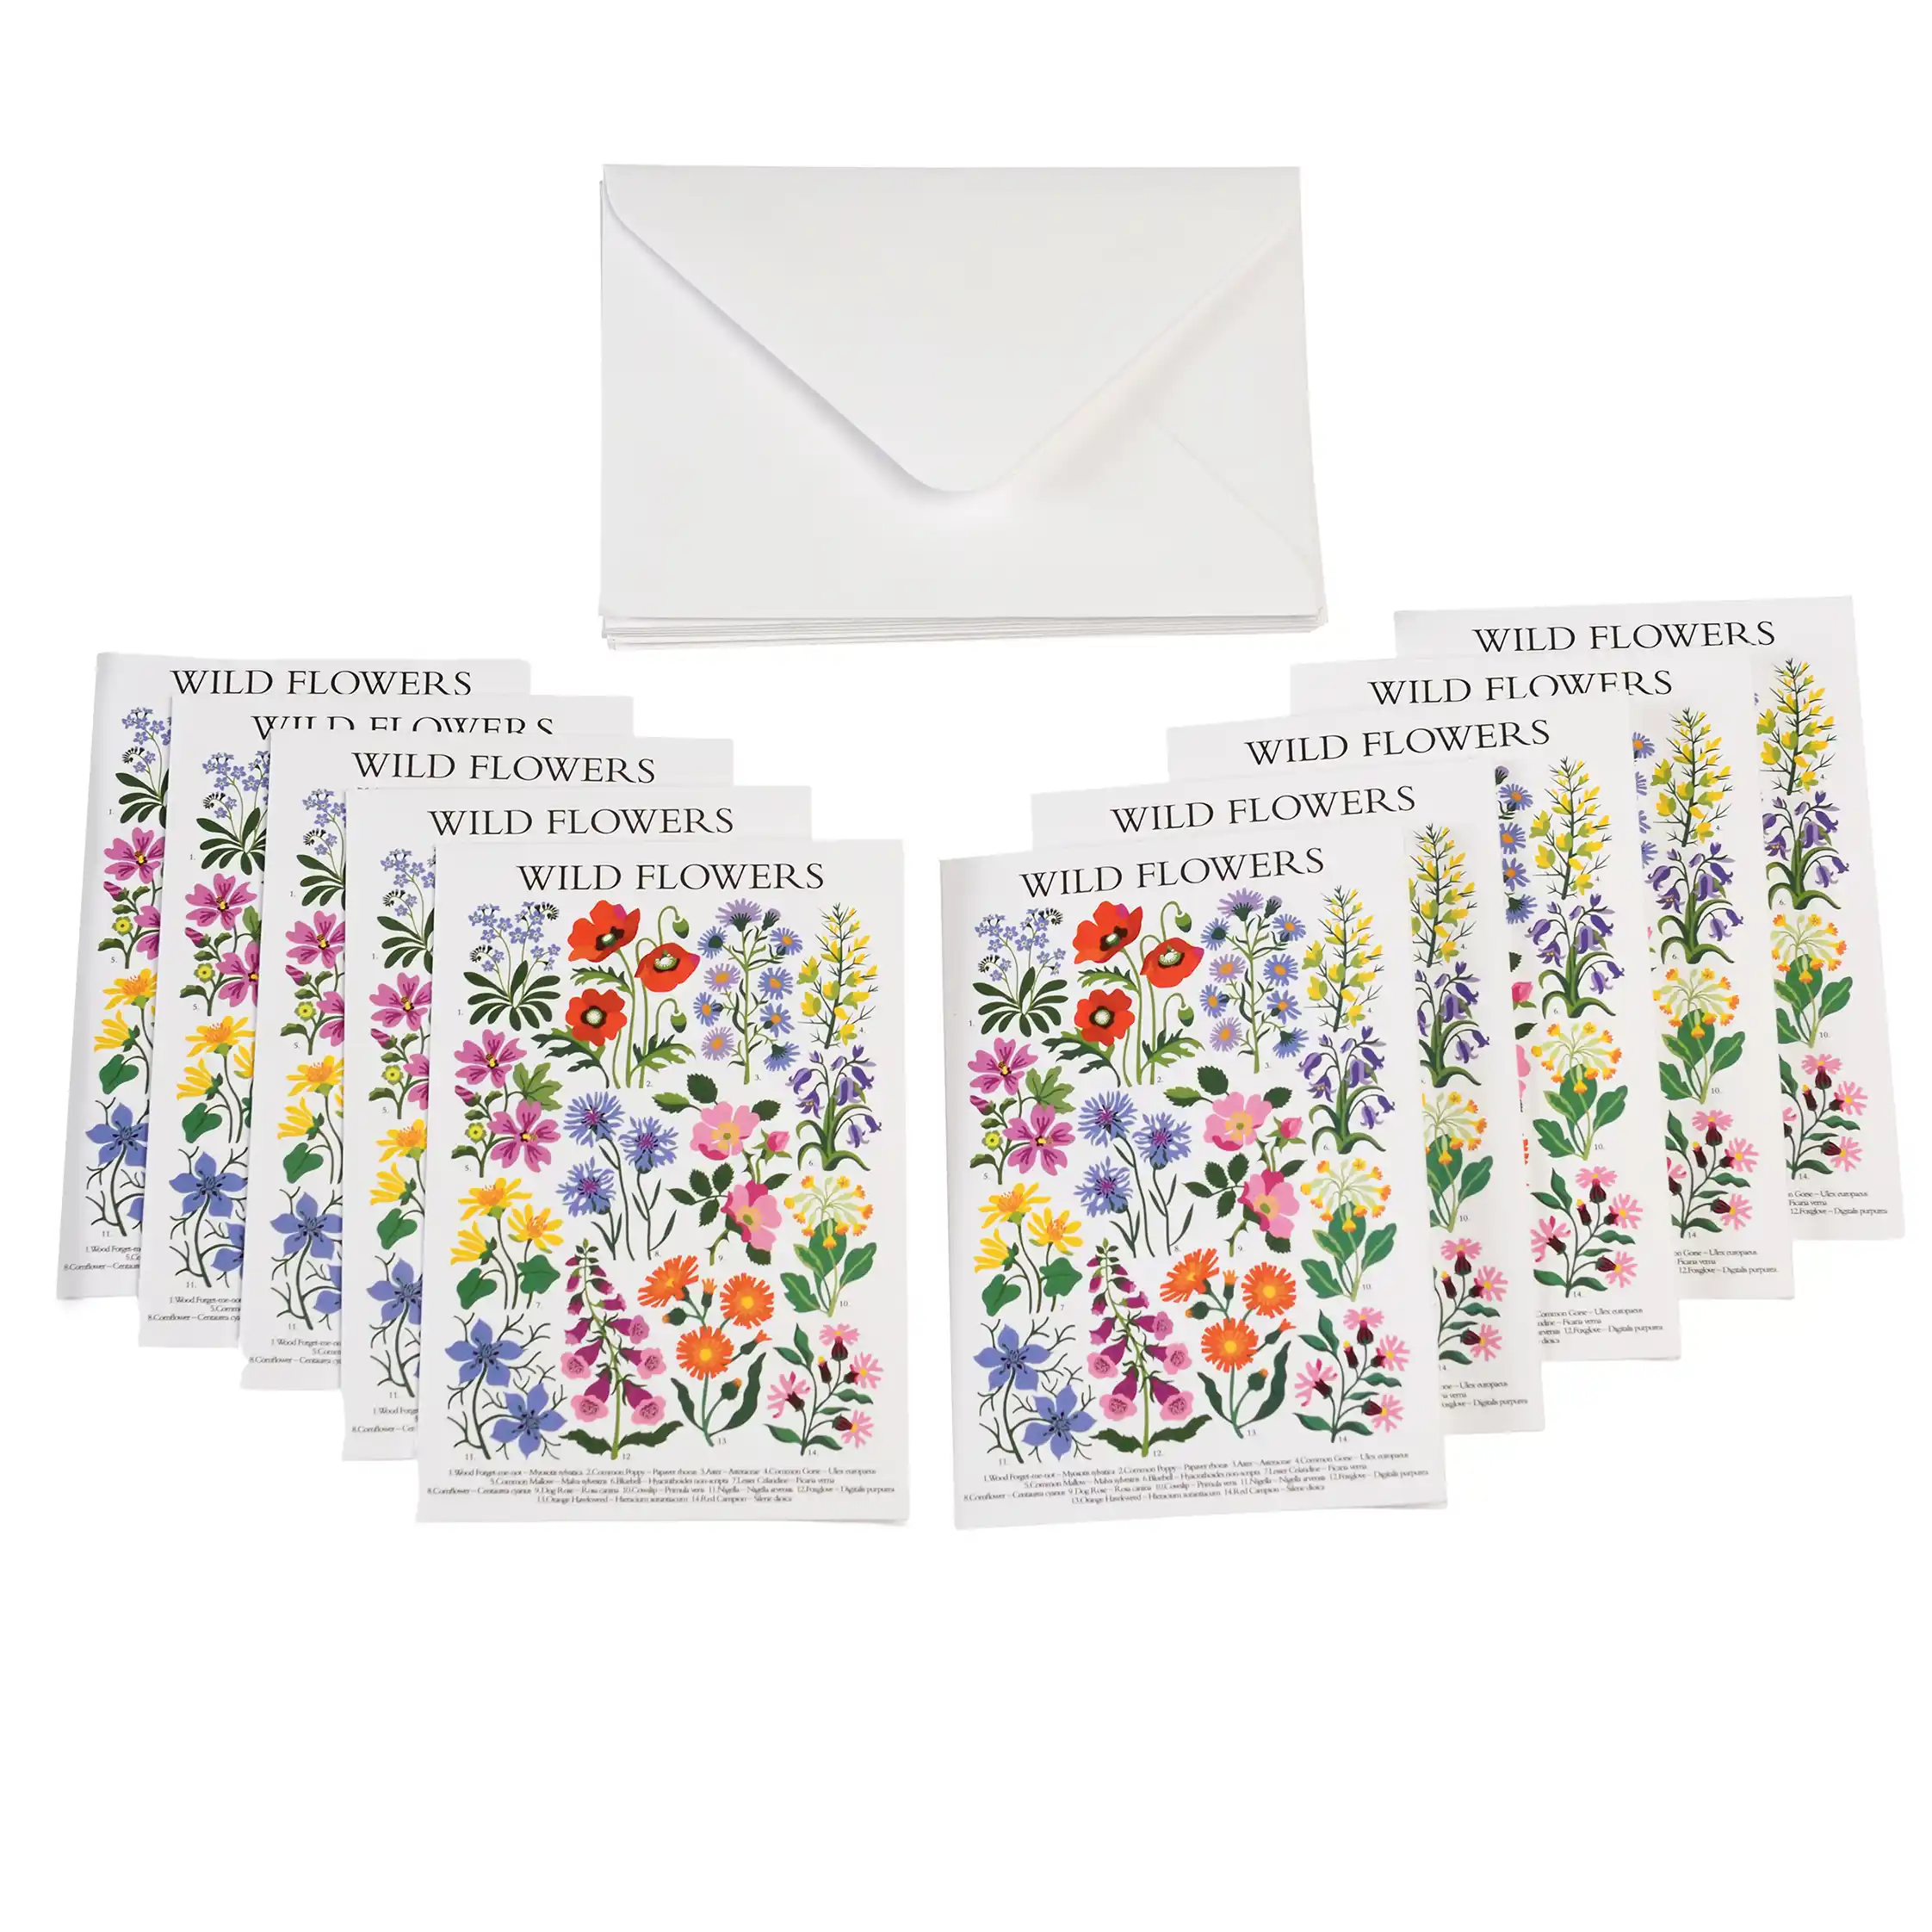 greetings cards (pack of 10) - wild flowers